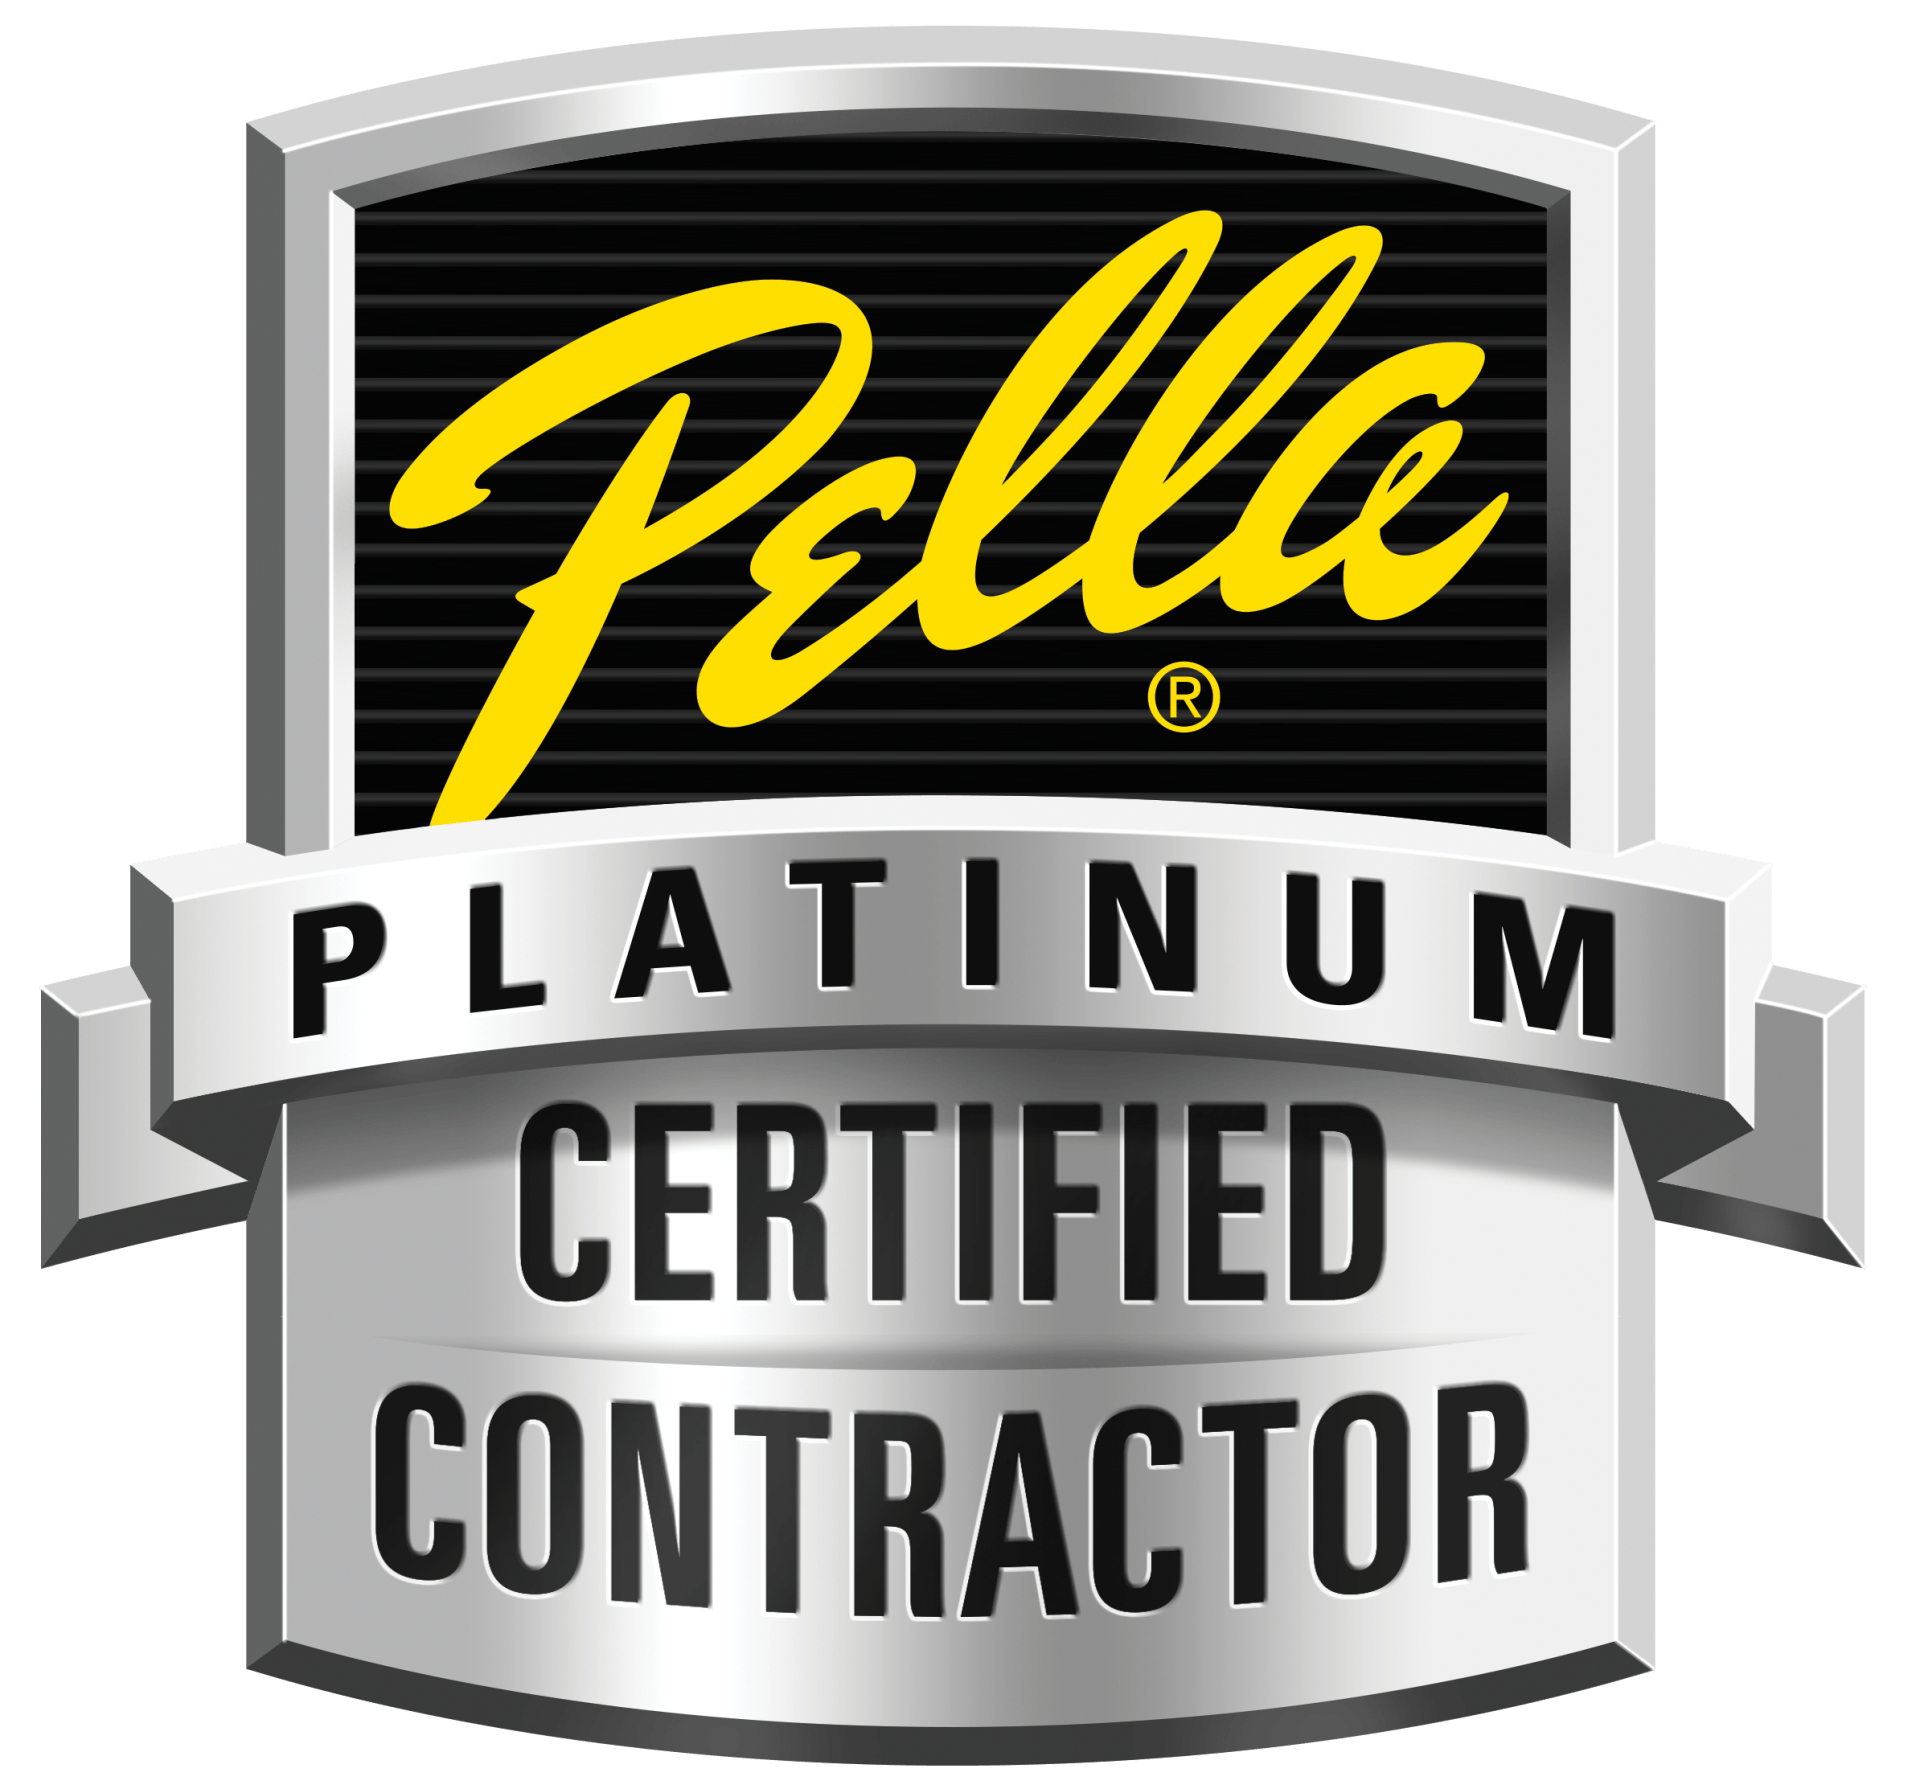 pella windows platinum certified contractor logo